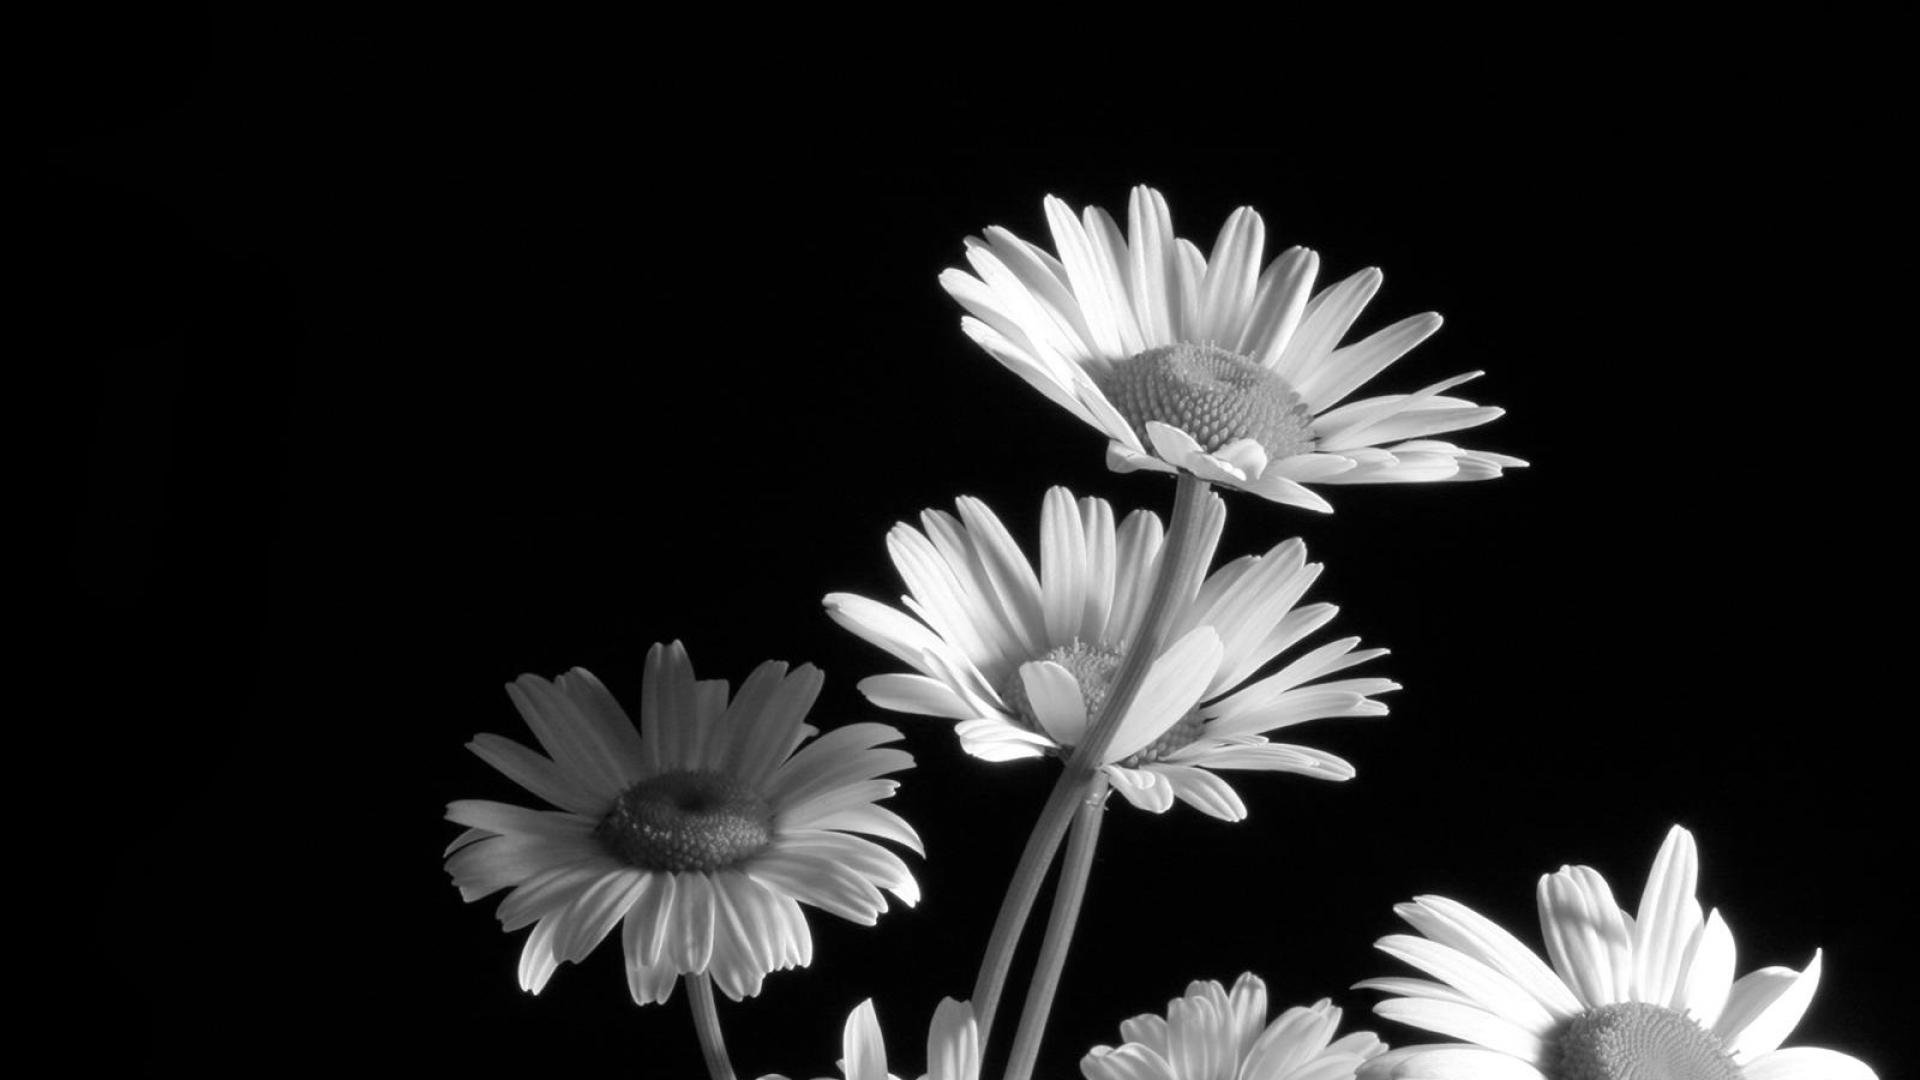 Black And White Flower Wallpaper Black And White Flower. 34+ Black and